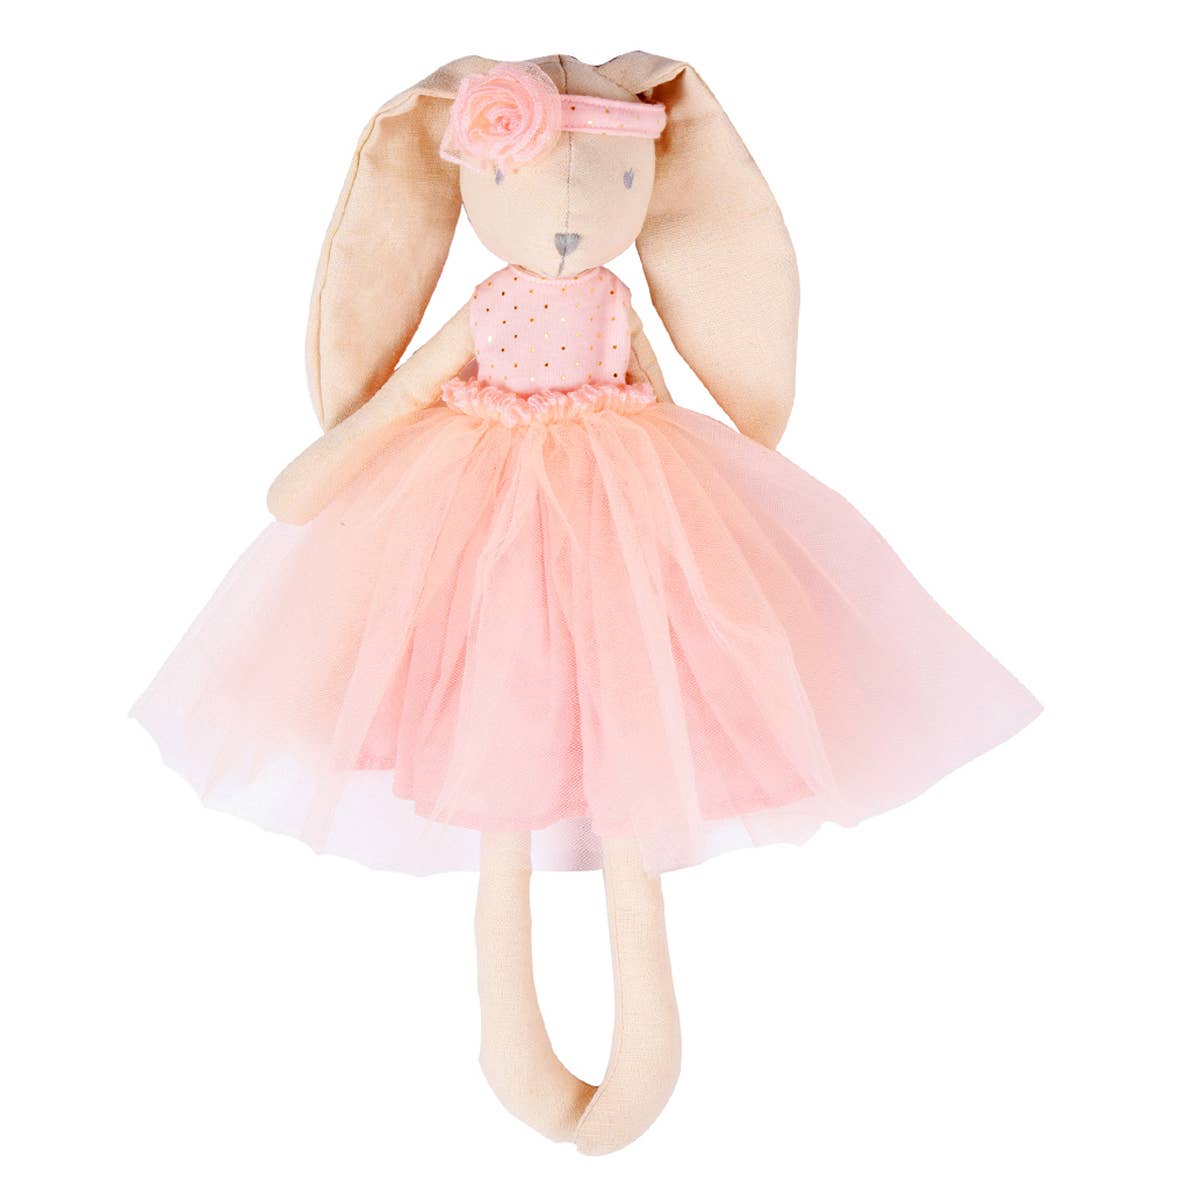 Marcella the Bunny Ballerina Doll